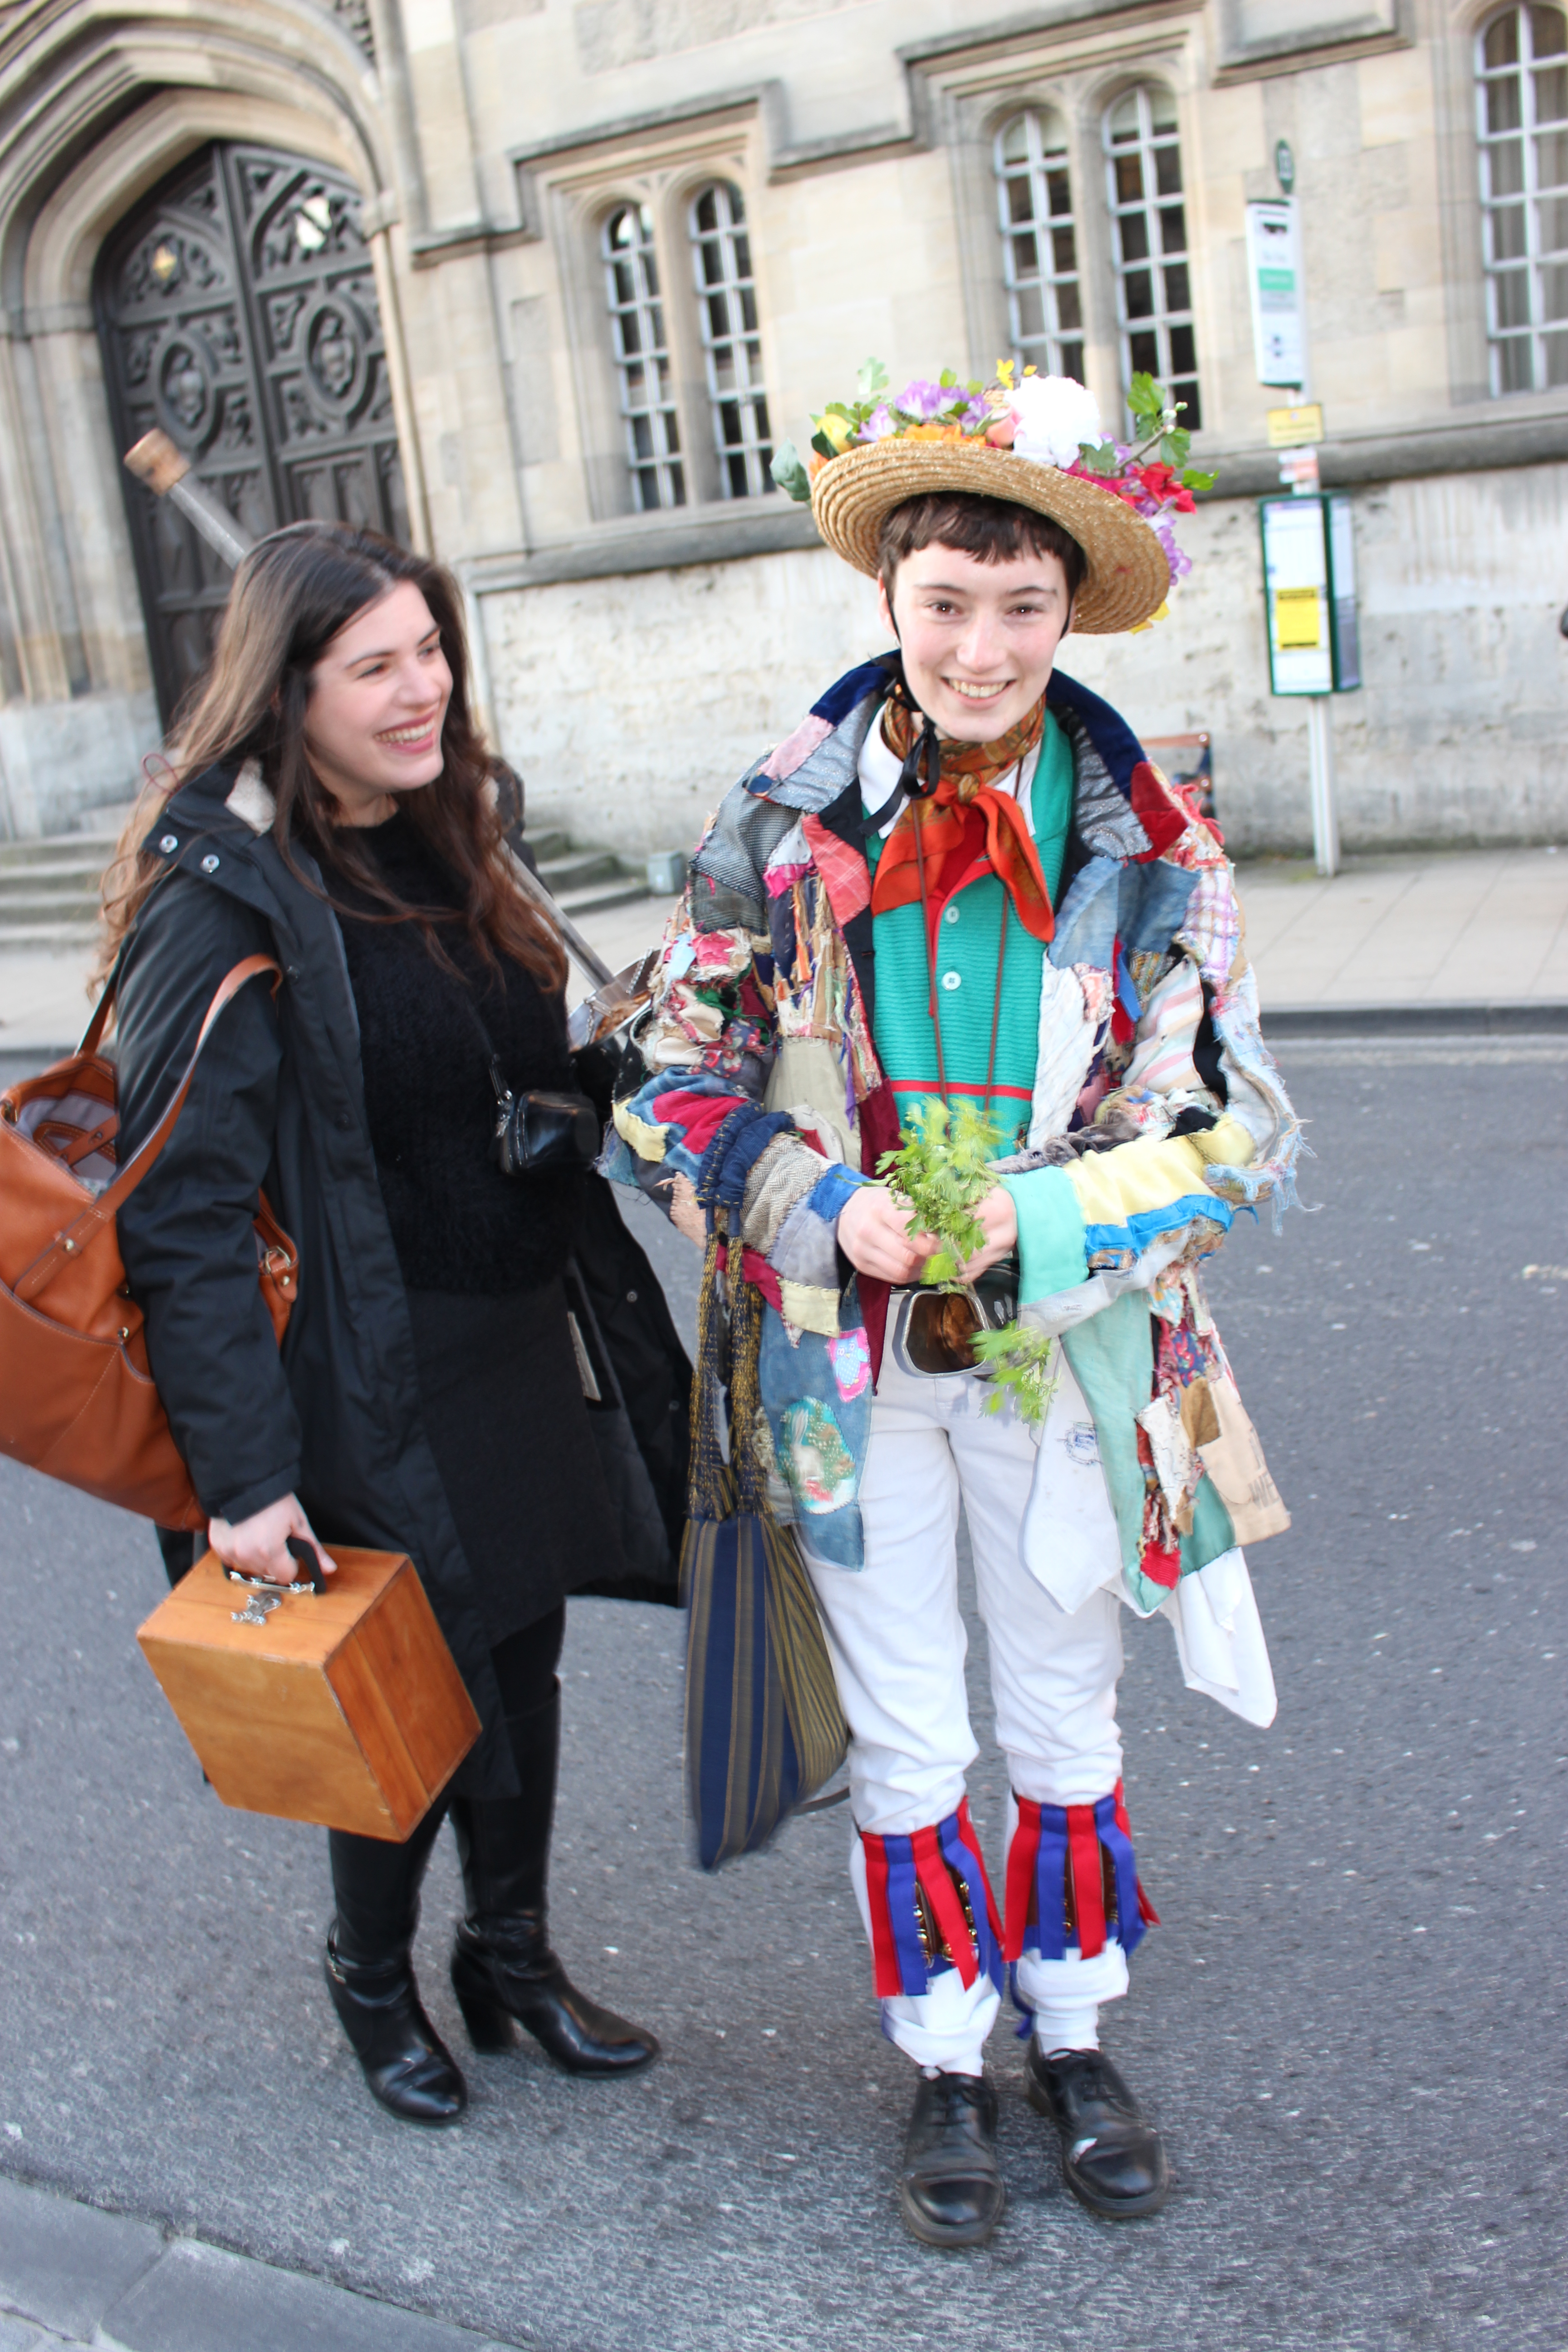 Morris dancer in flower-bedecked hat, High Street, Oxford, May 
Morning.